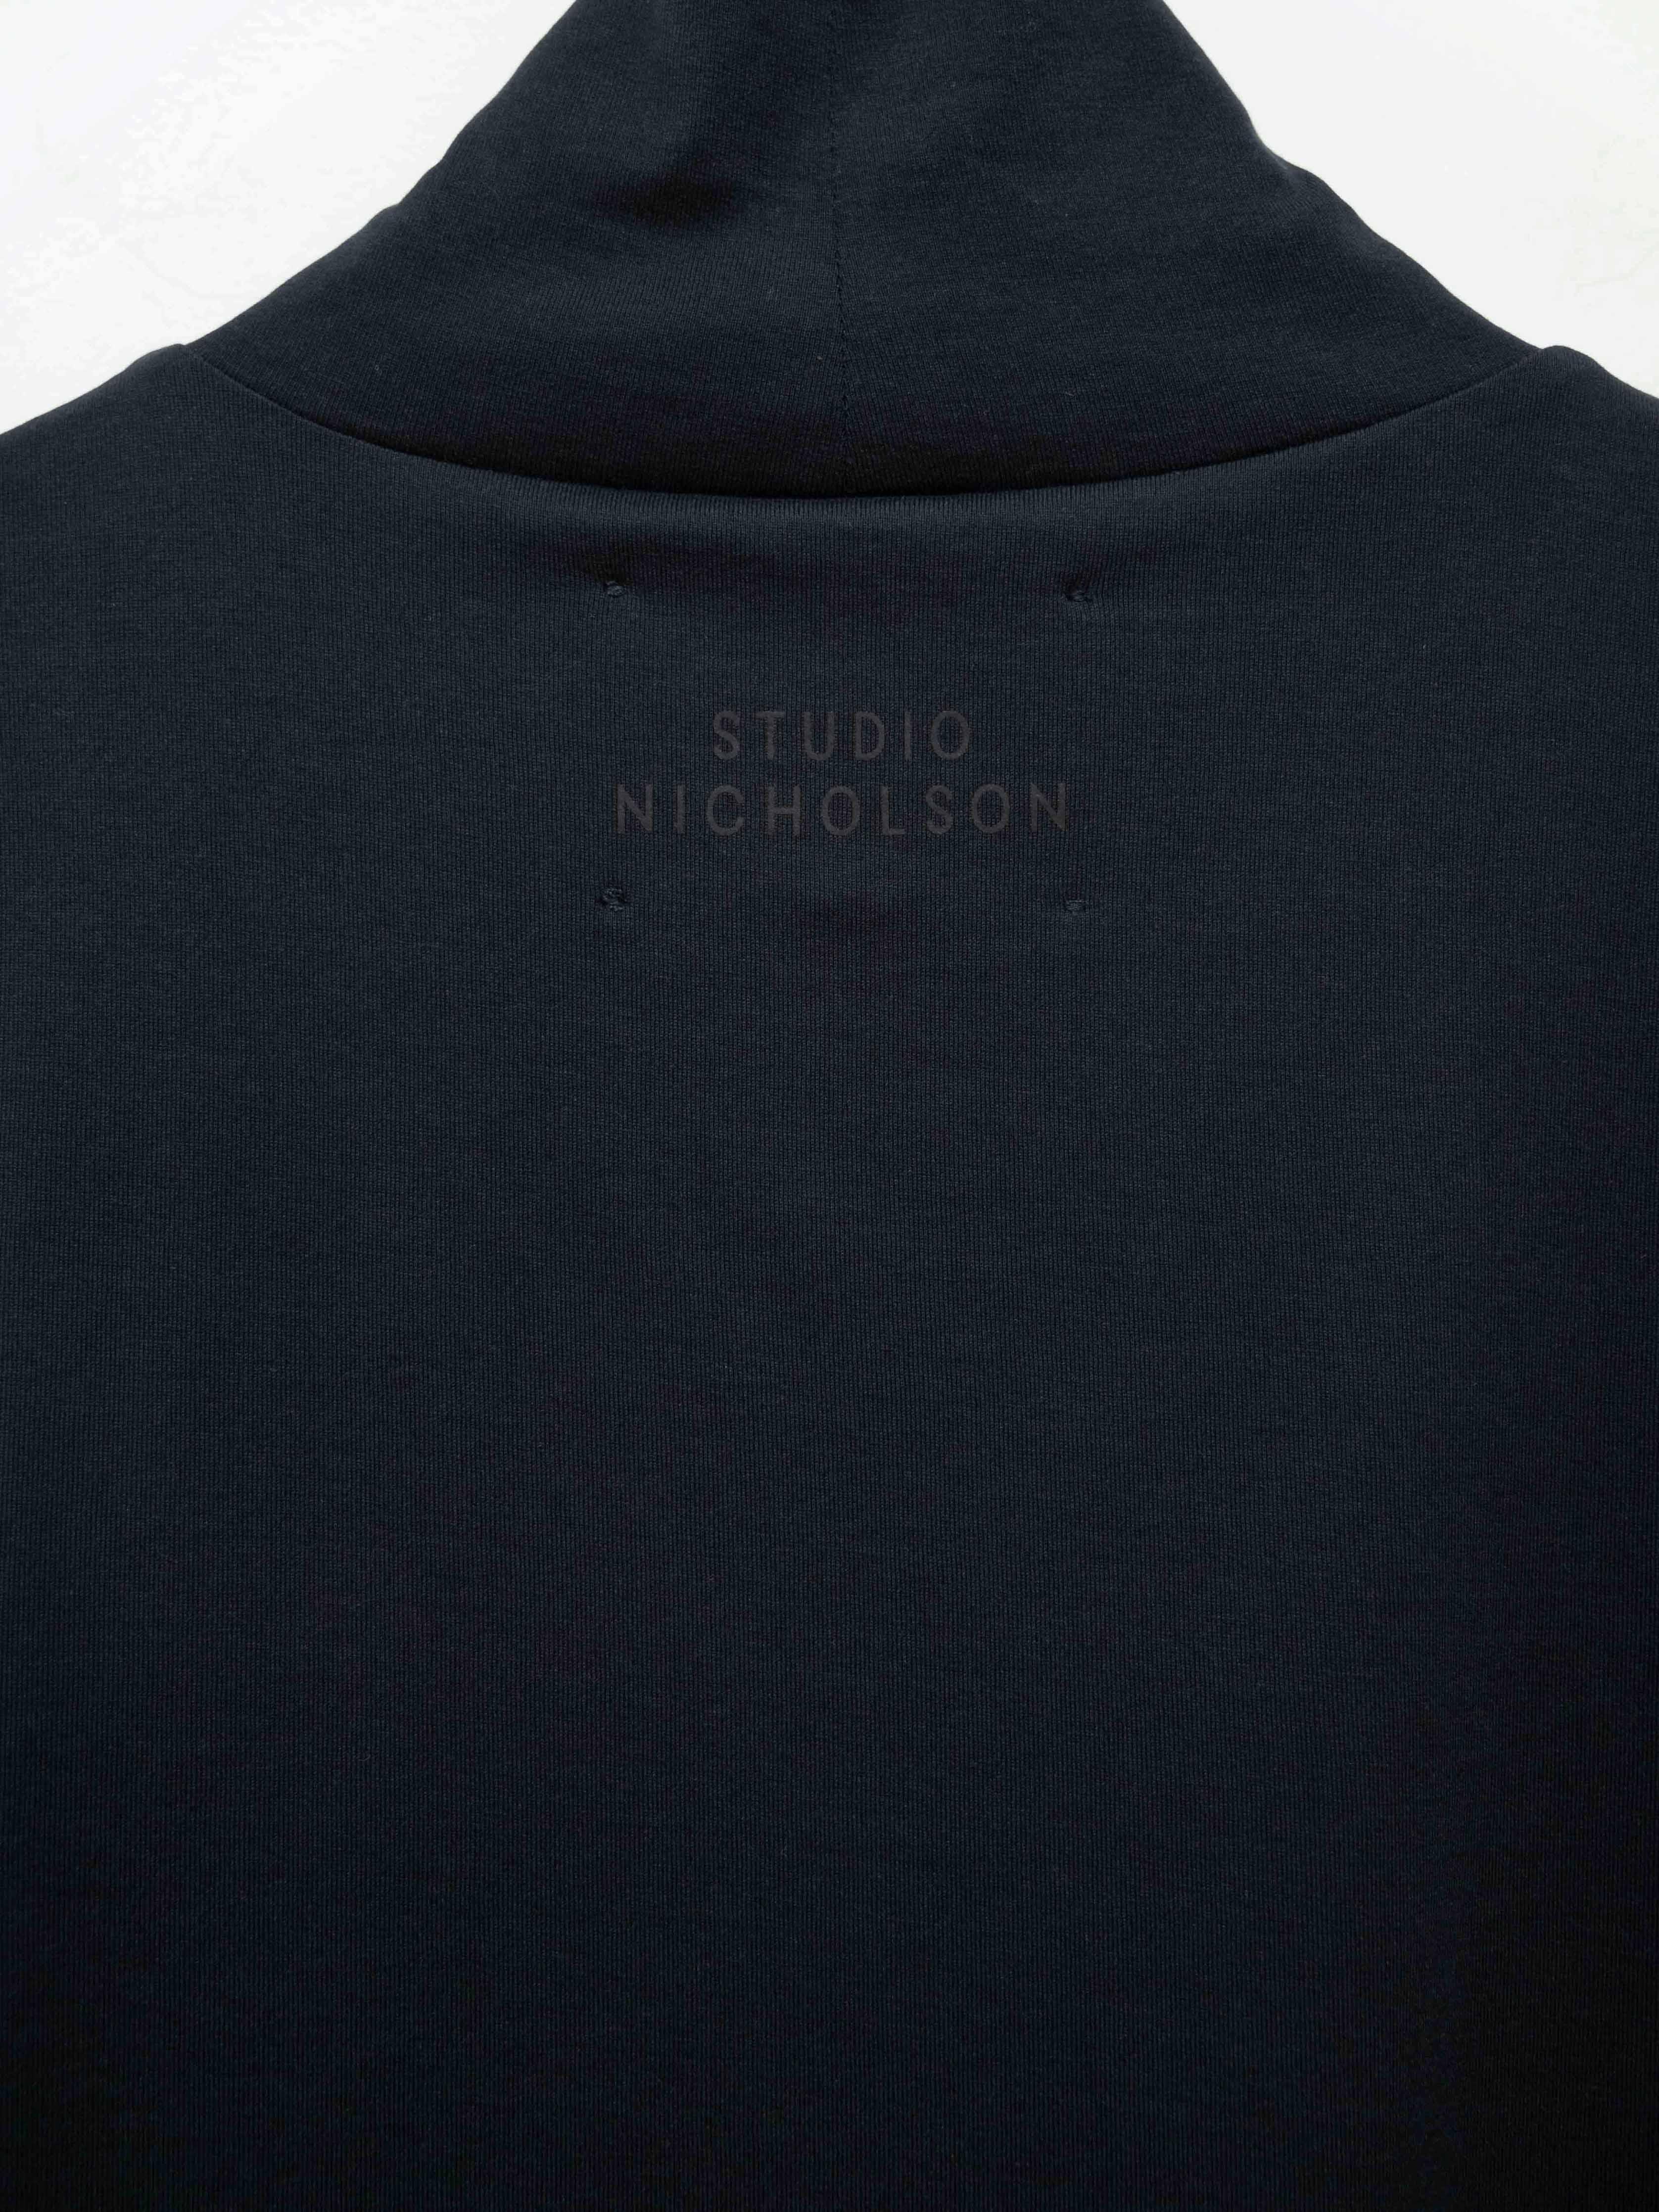 Namu Shop - Studio Nicholson Barelli Roll Neck Top - Dark Navy